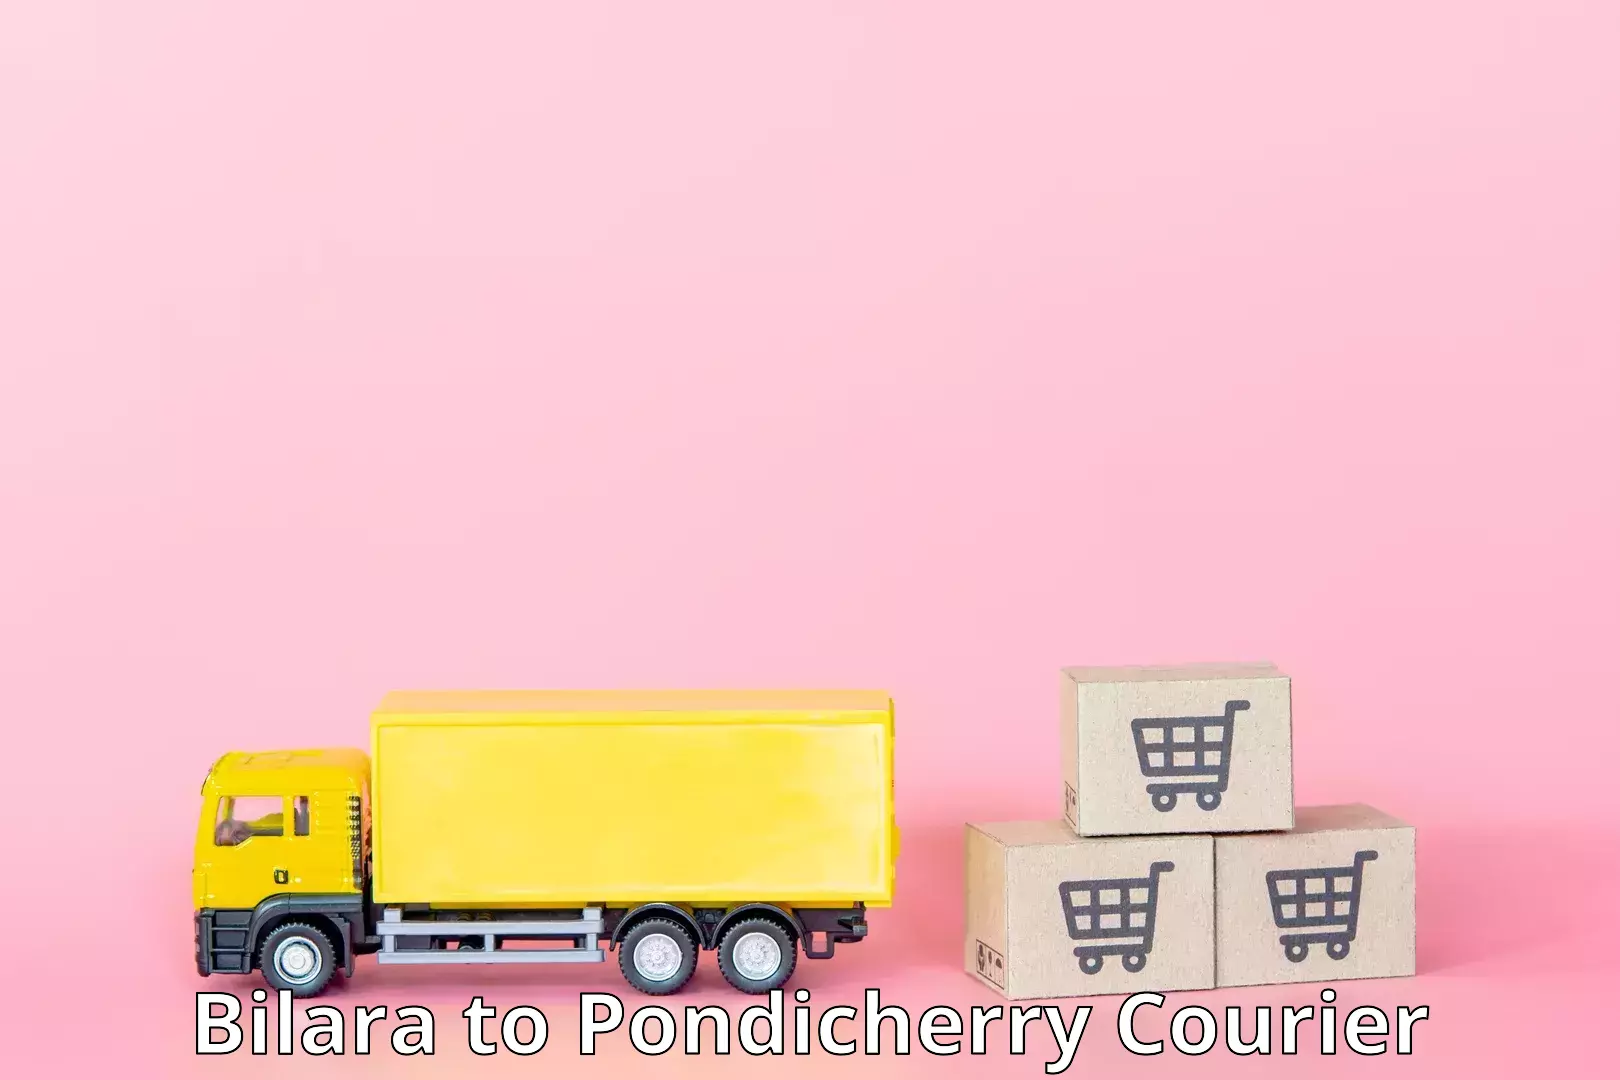 Package delivery network Bilara to Pondicherry